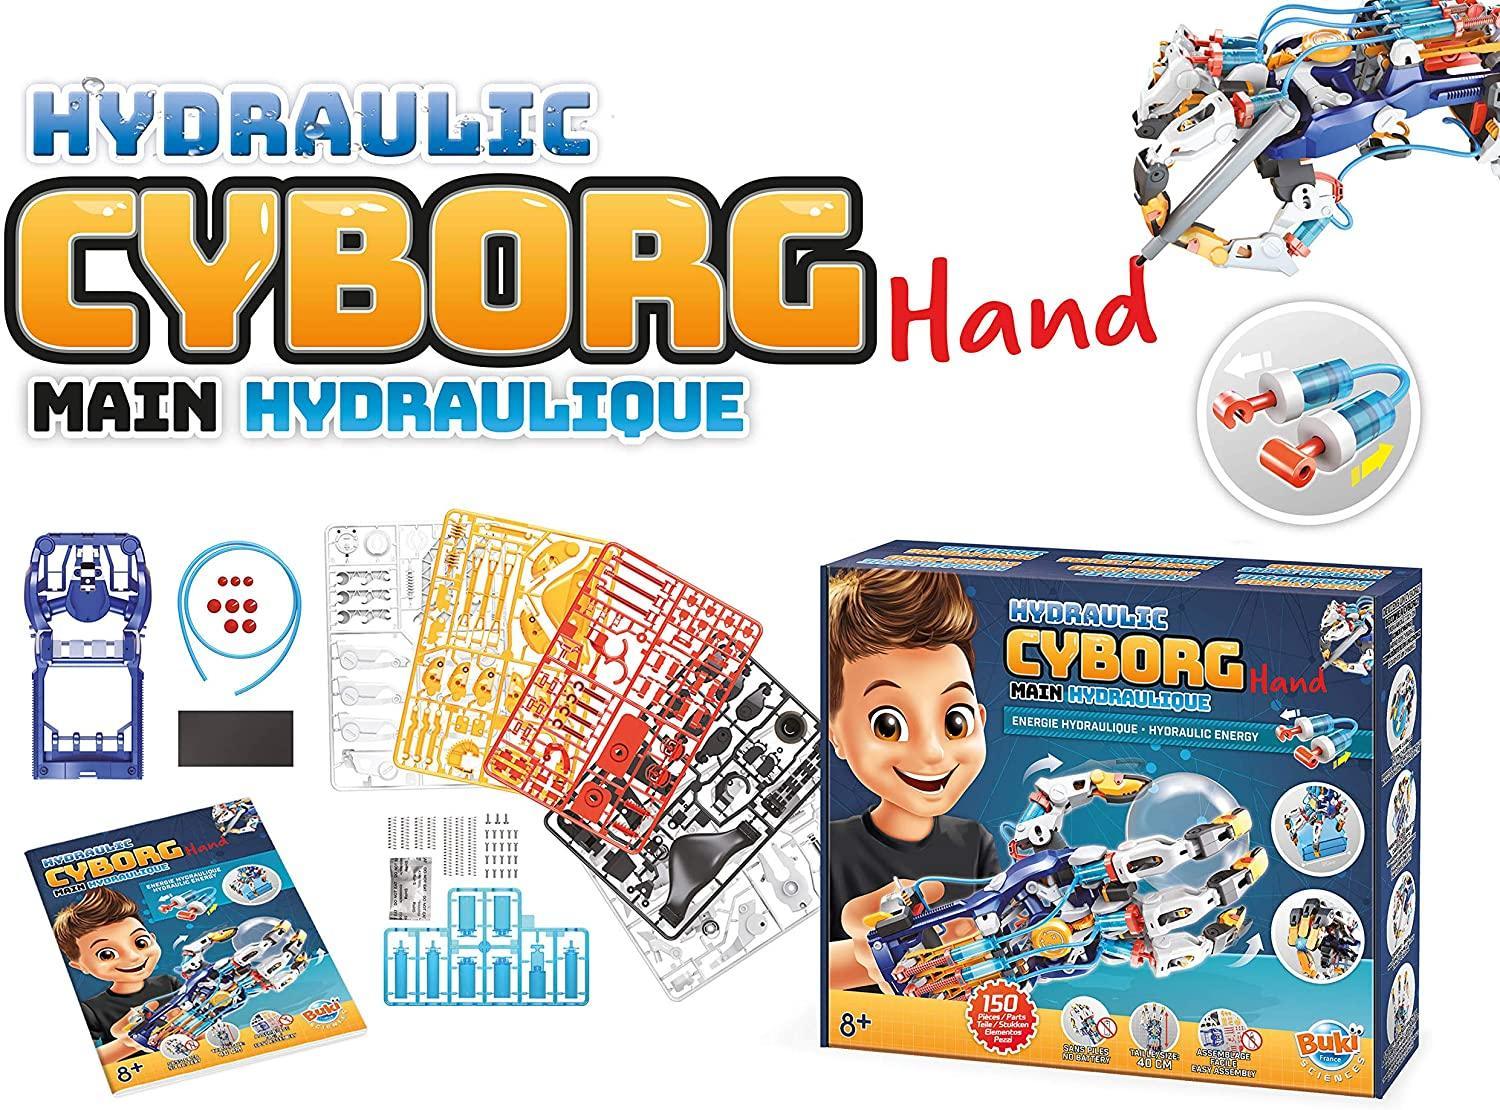 Bo' jeux - Hydraulic Cyborg Hand Le mardi, on fait plaisir aux